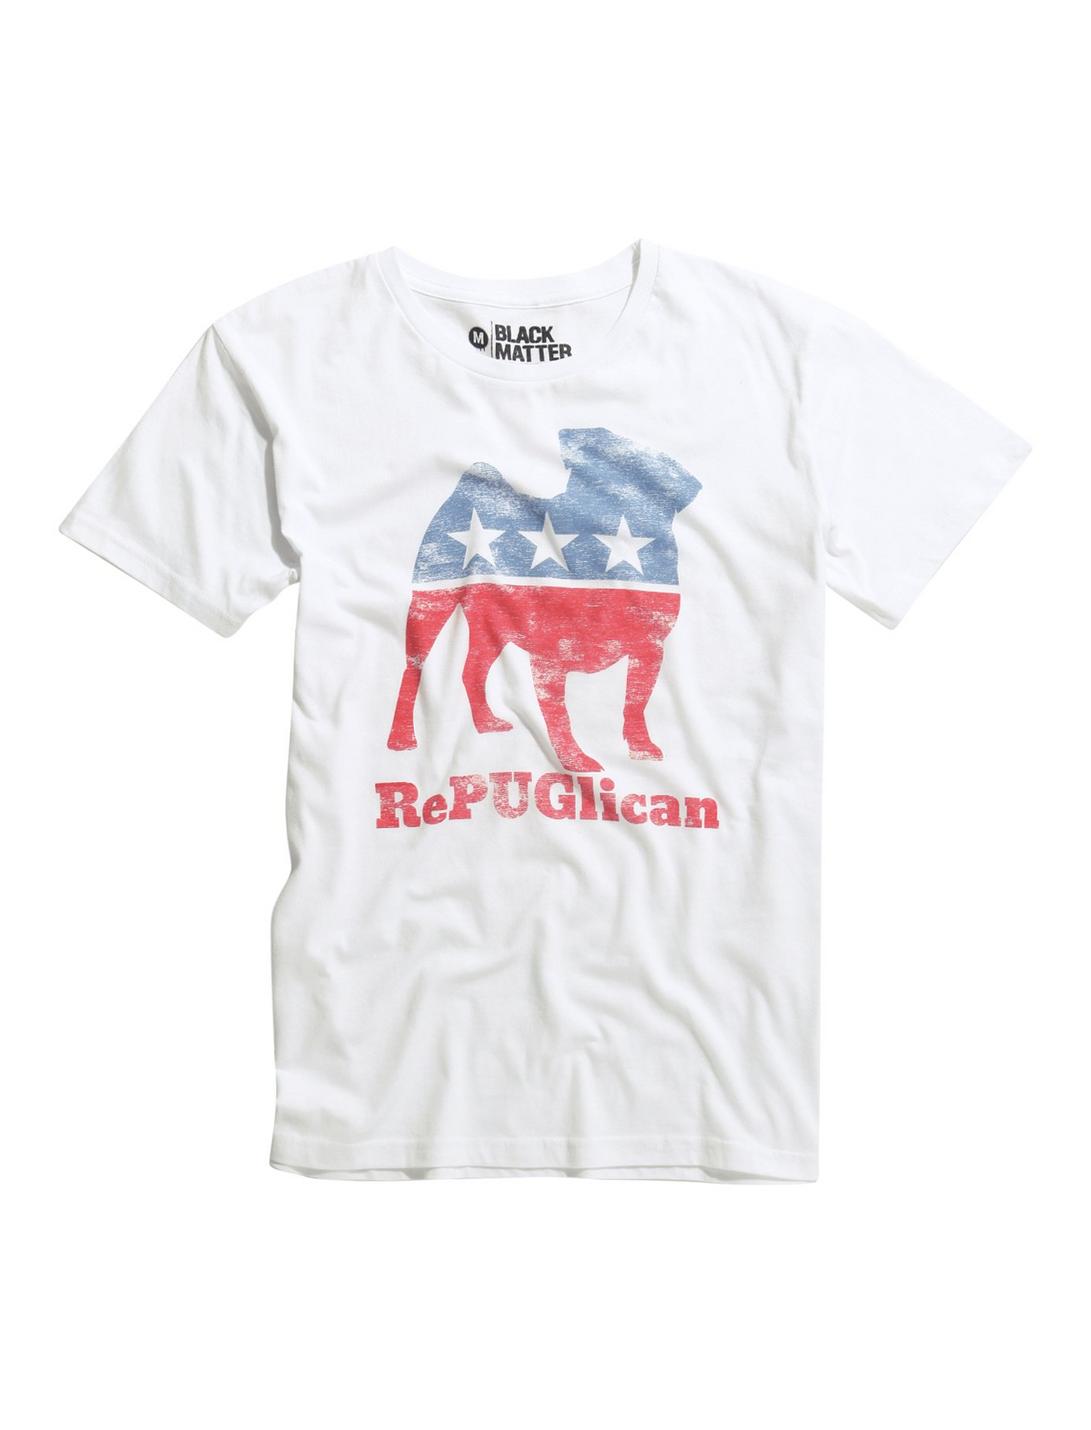 RePUGlican T-Shirt | Hot Topic